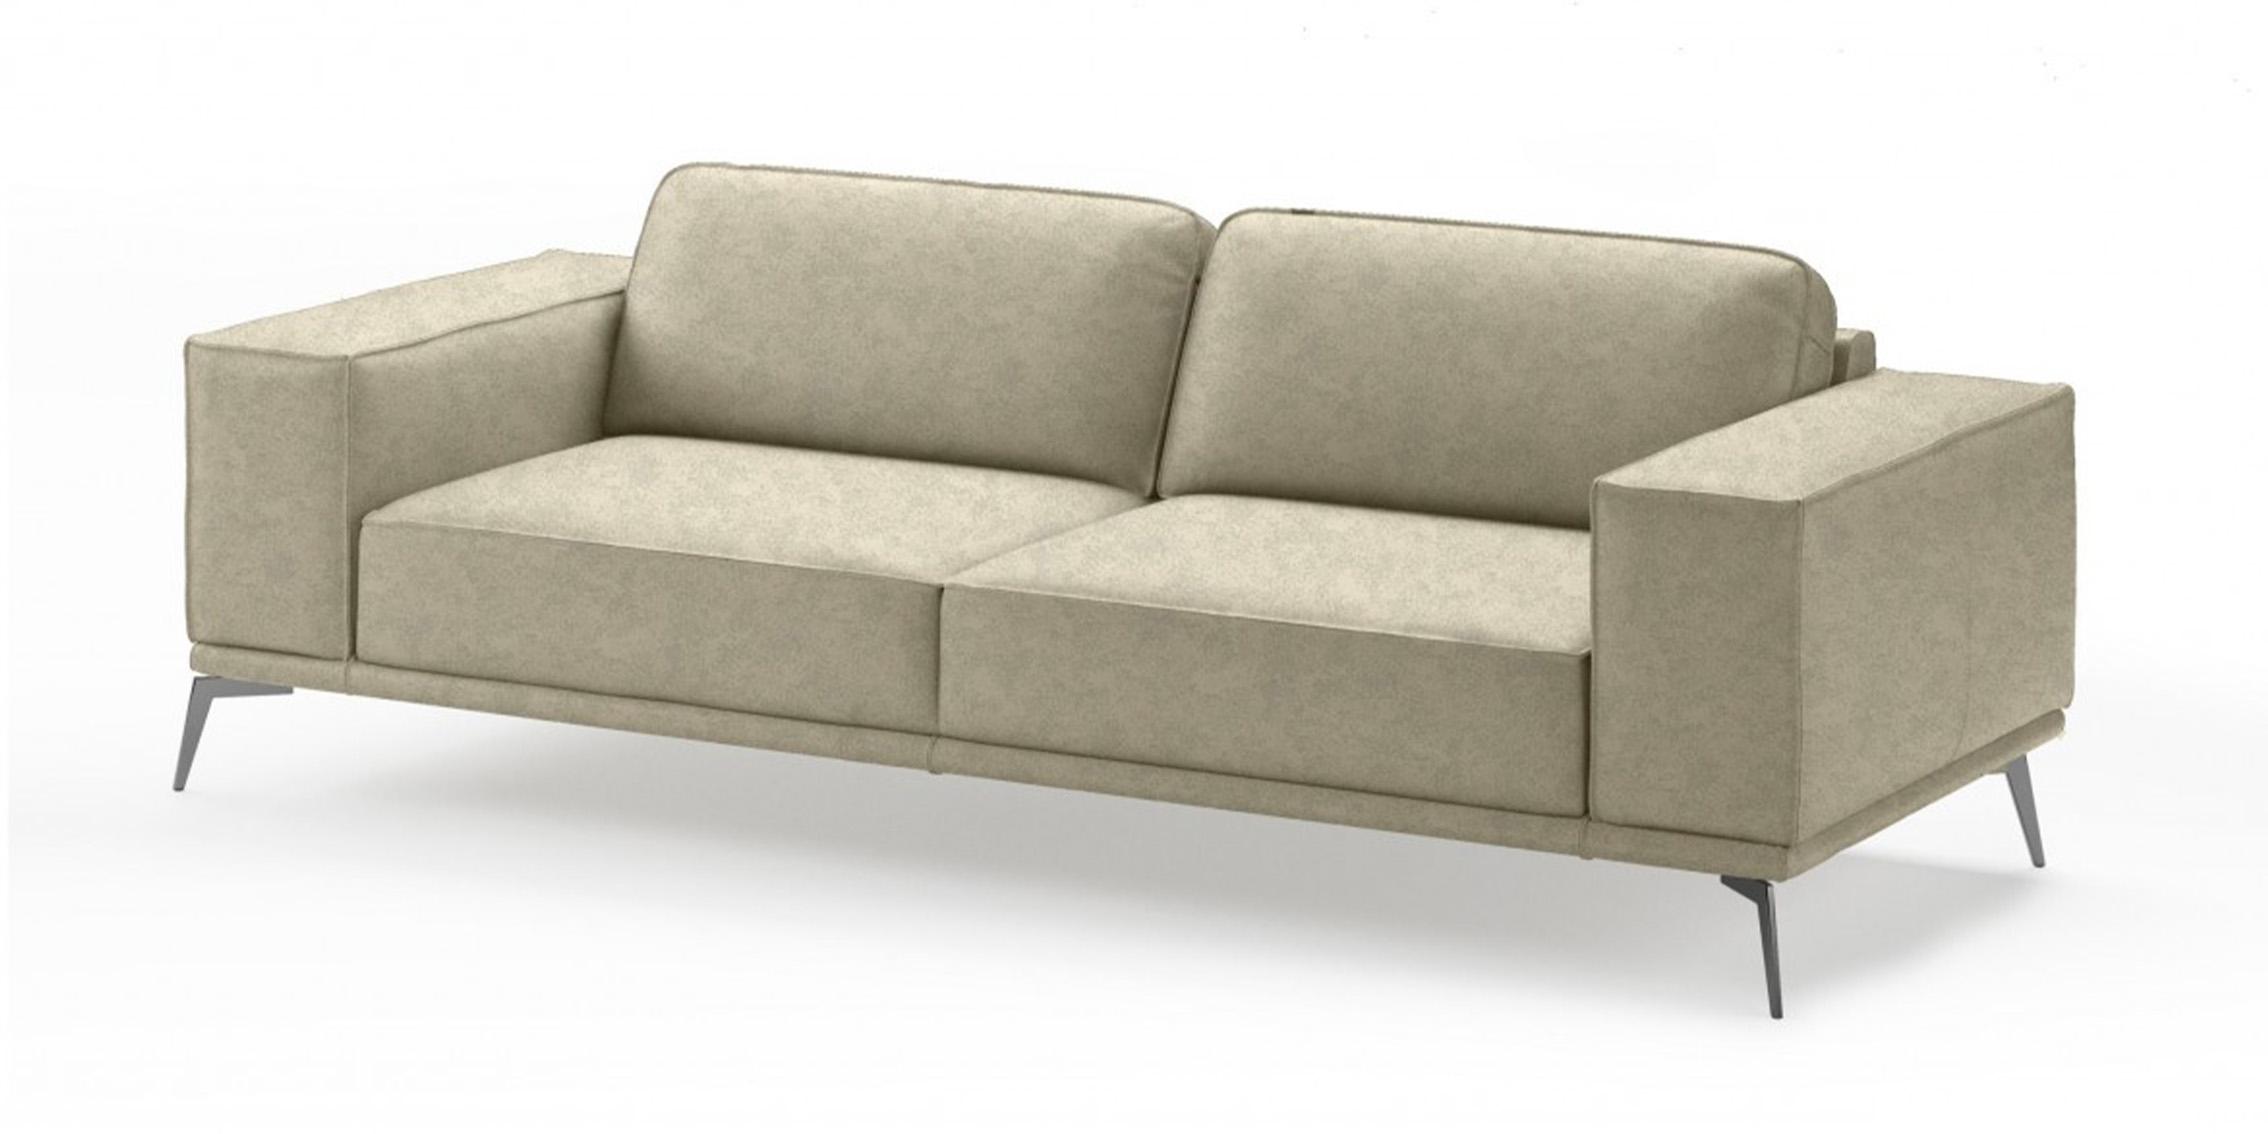 Contemporary, Modern Sofa VGCCSOHO-SF-CL-GRY-S VGCCSOHO-SF-CL-GRY-S in Taupe Italian Leather